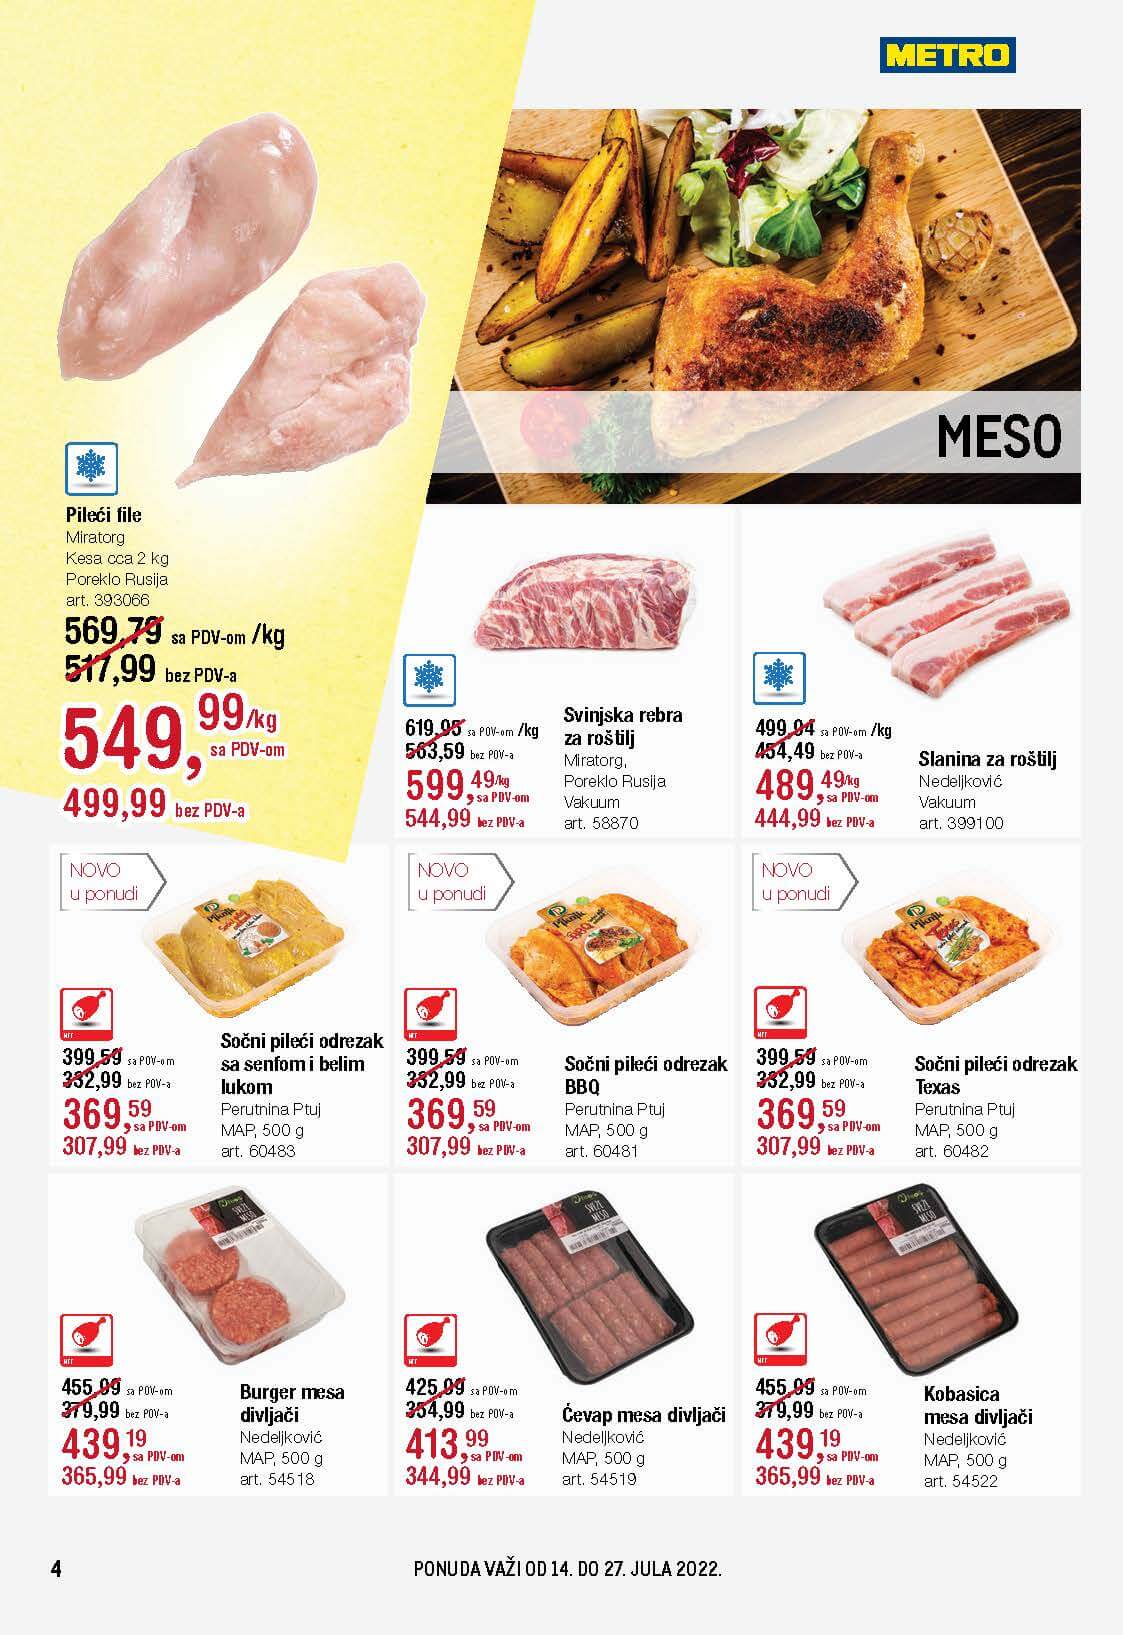 METRO Katalog prehrane i neprehrane JUL 2022 super snizenje do 27.7.2022. Page 04